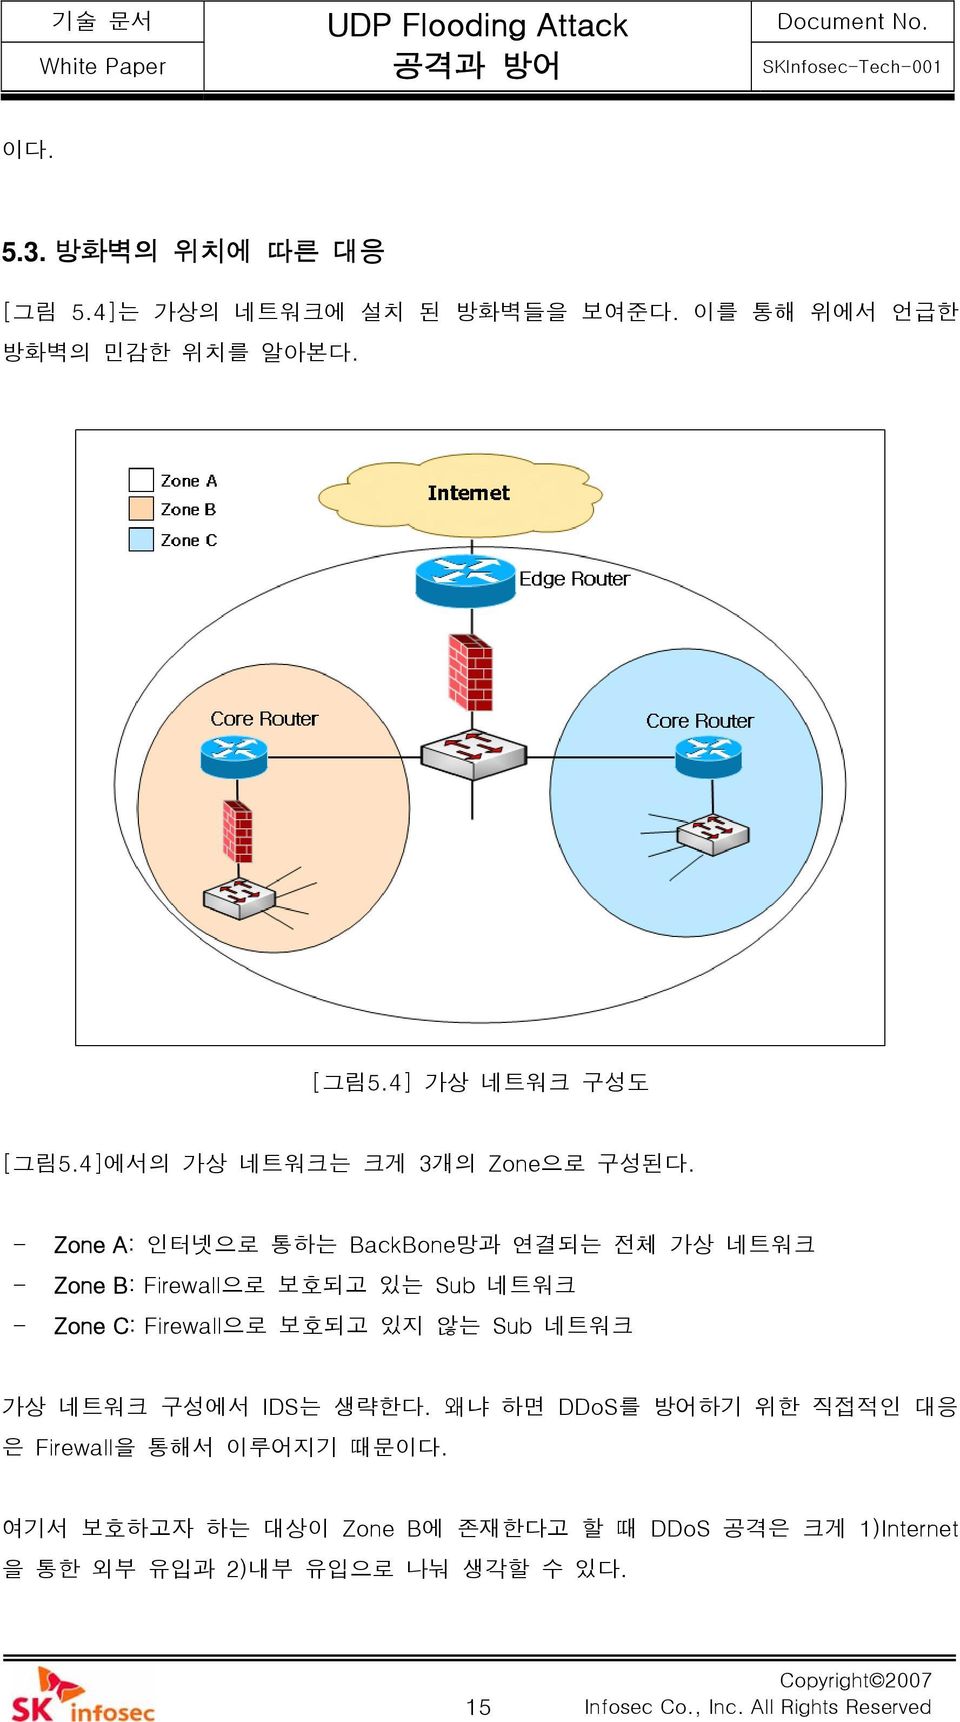 - Zone A: 인터넷으로 통하는 BackBone망과 연결되는 전체 가상 네트워크 - Zone B: Firewall으로 보호되고 있는 Sub 네트워크 - Zone C: Firewall으로 보호되고 있지